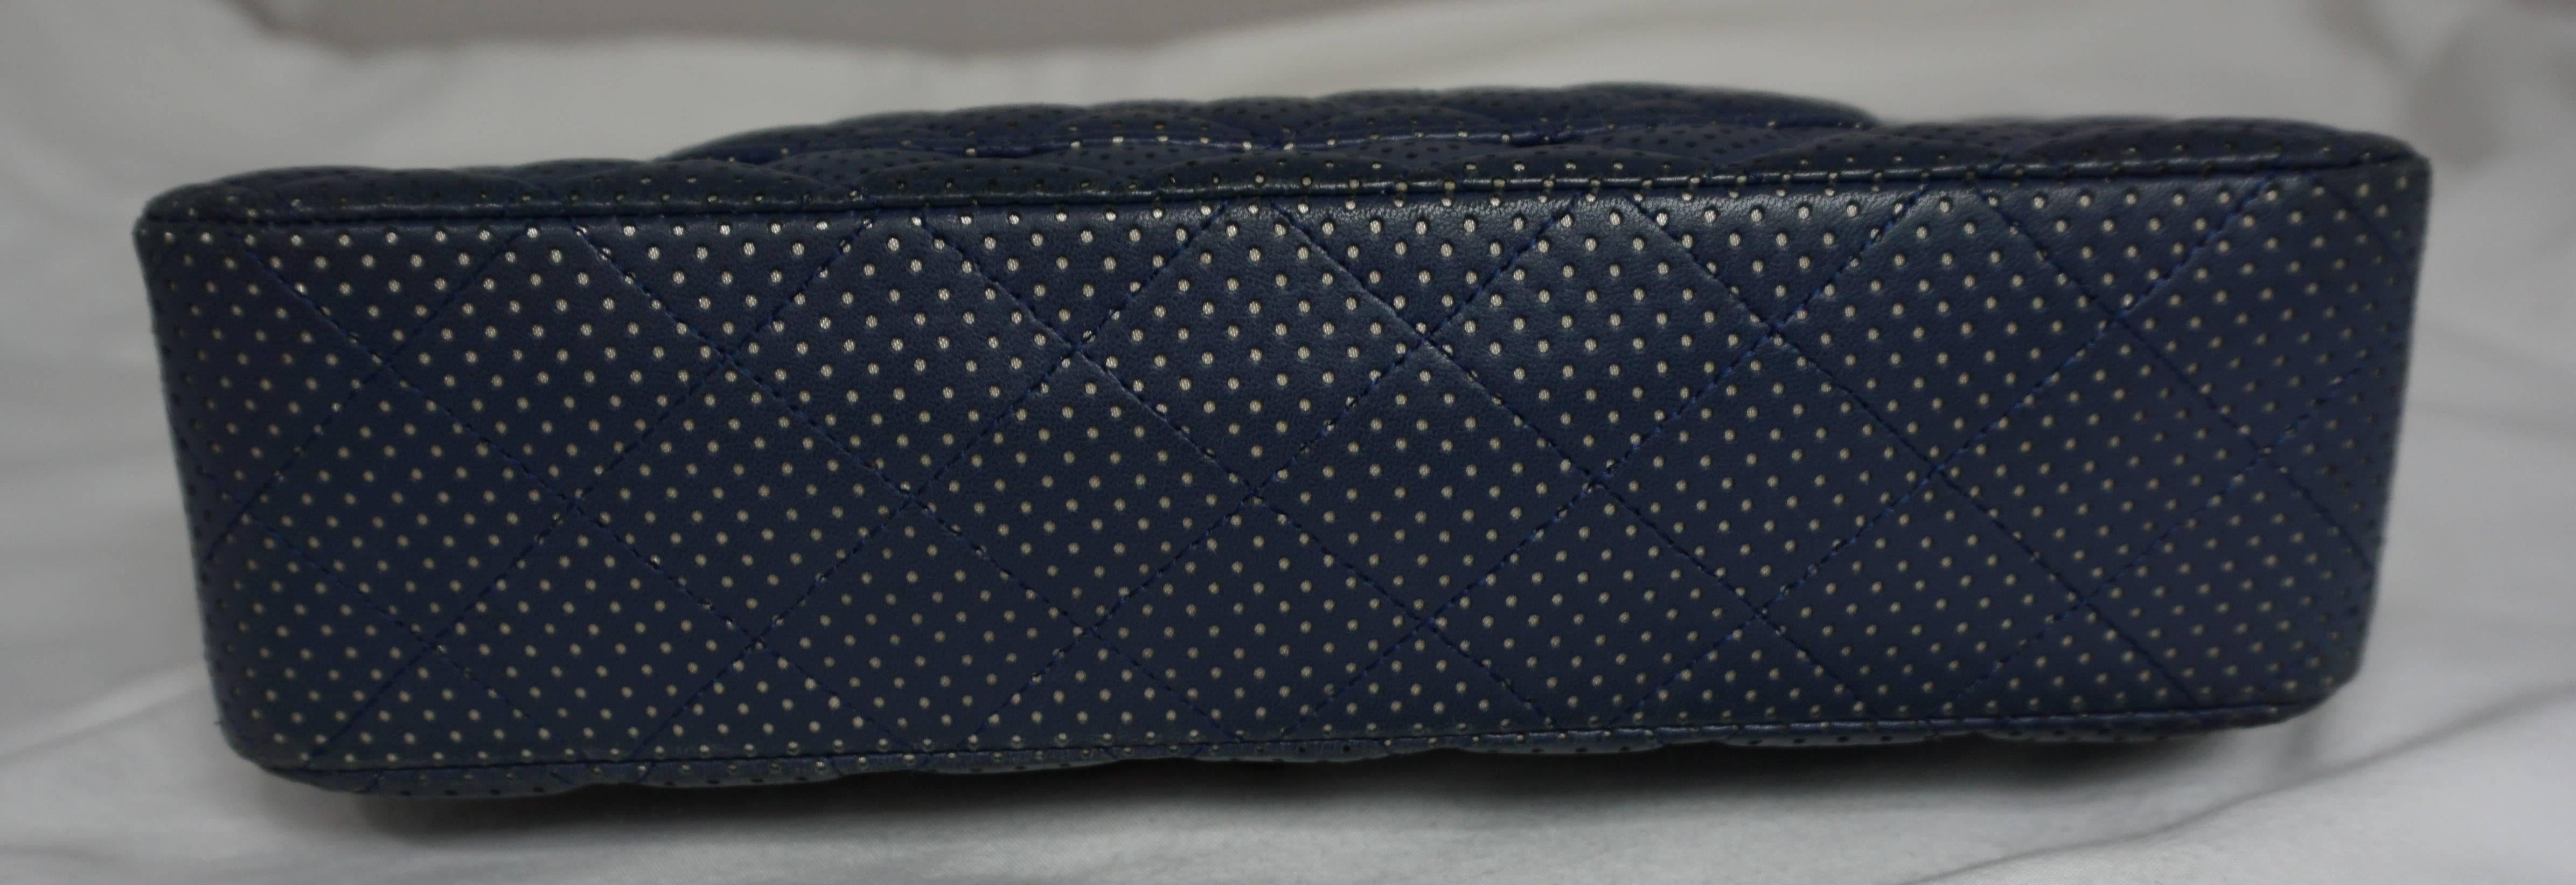 Black Chanel Blue/Silver Perforated Leather Medium Double Flap Handbag-SHW-2006